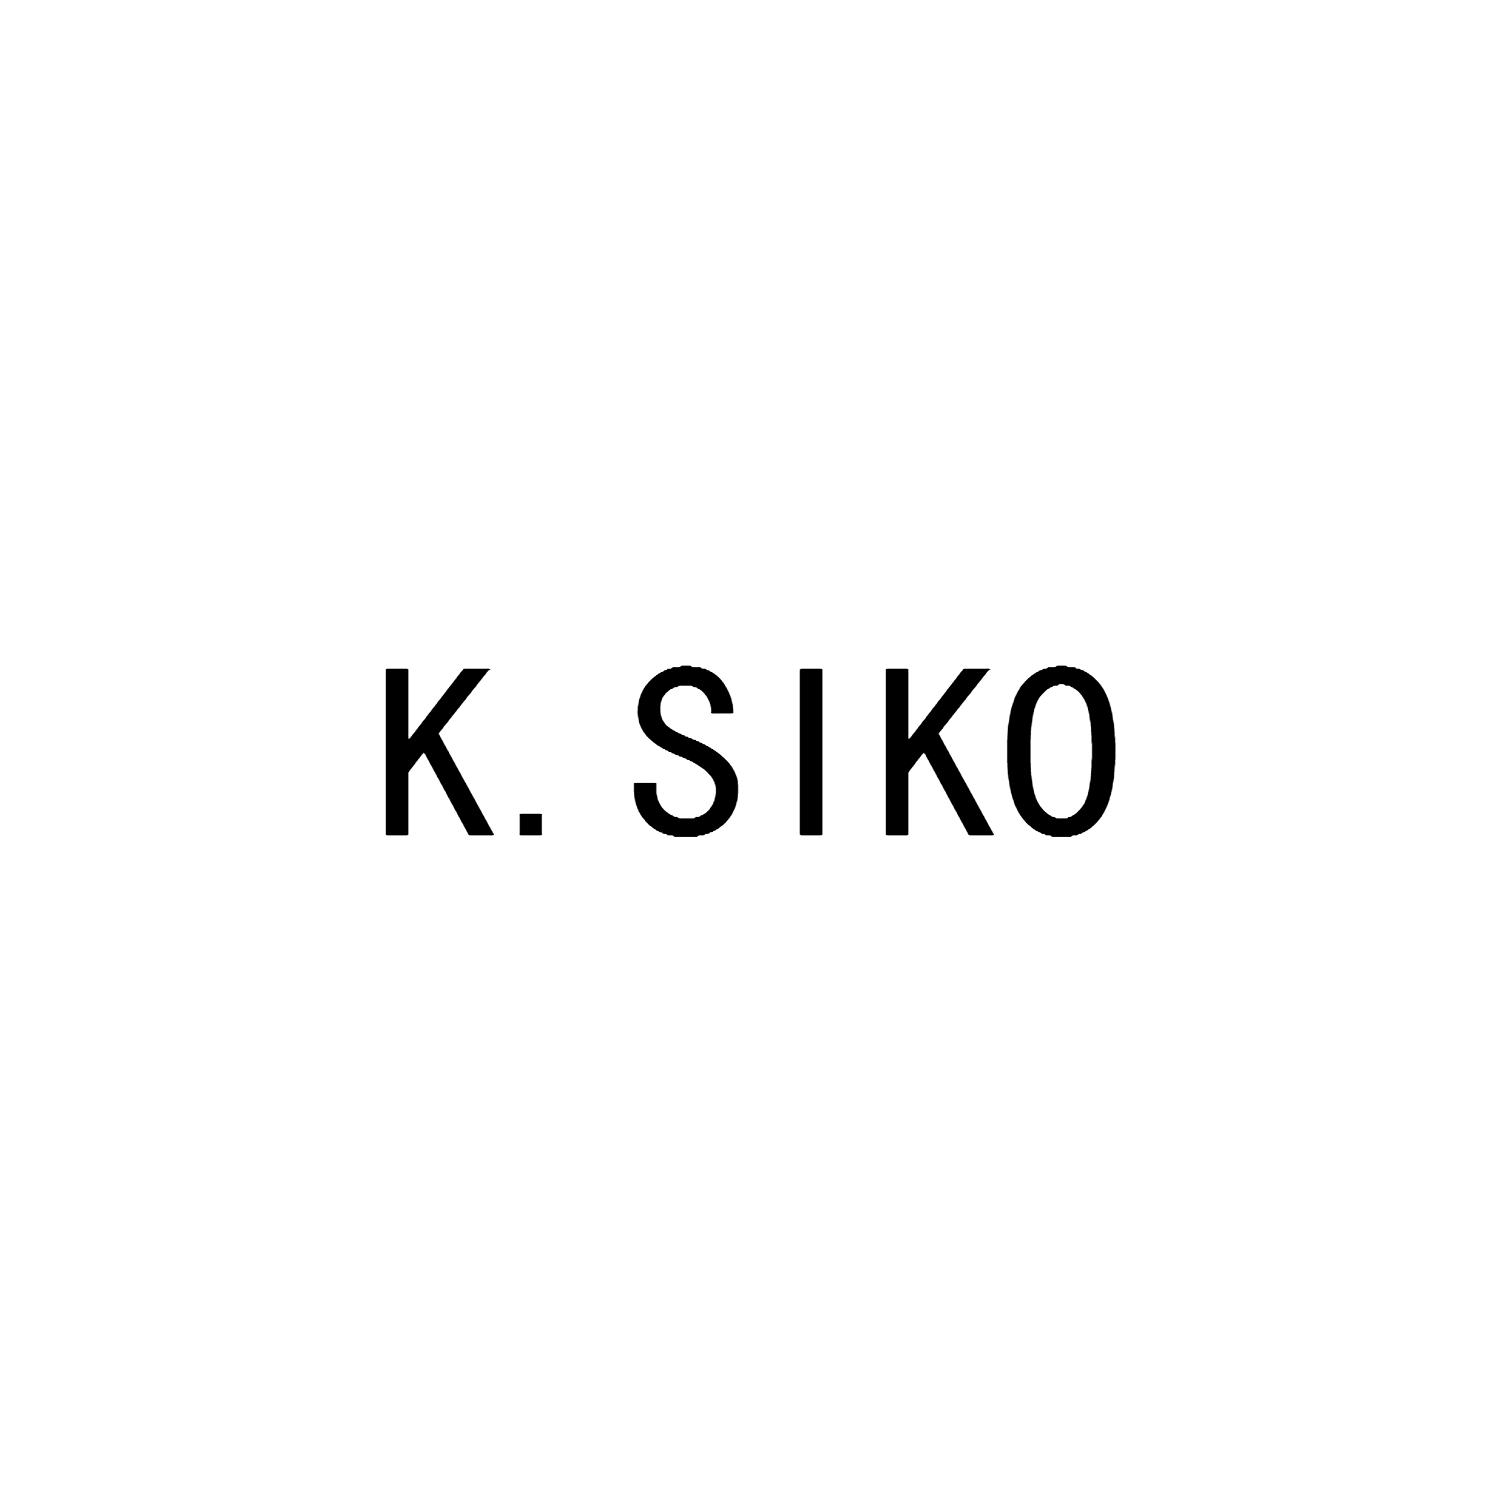 K.SIKO